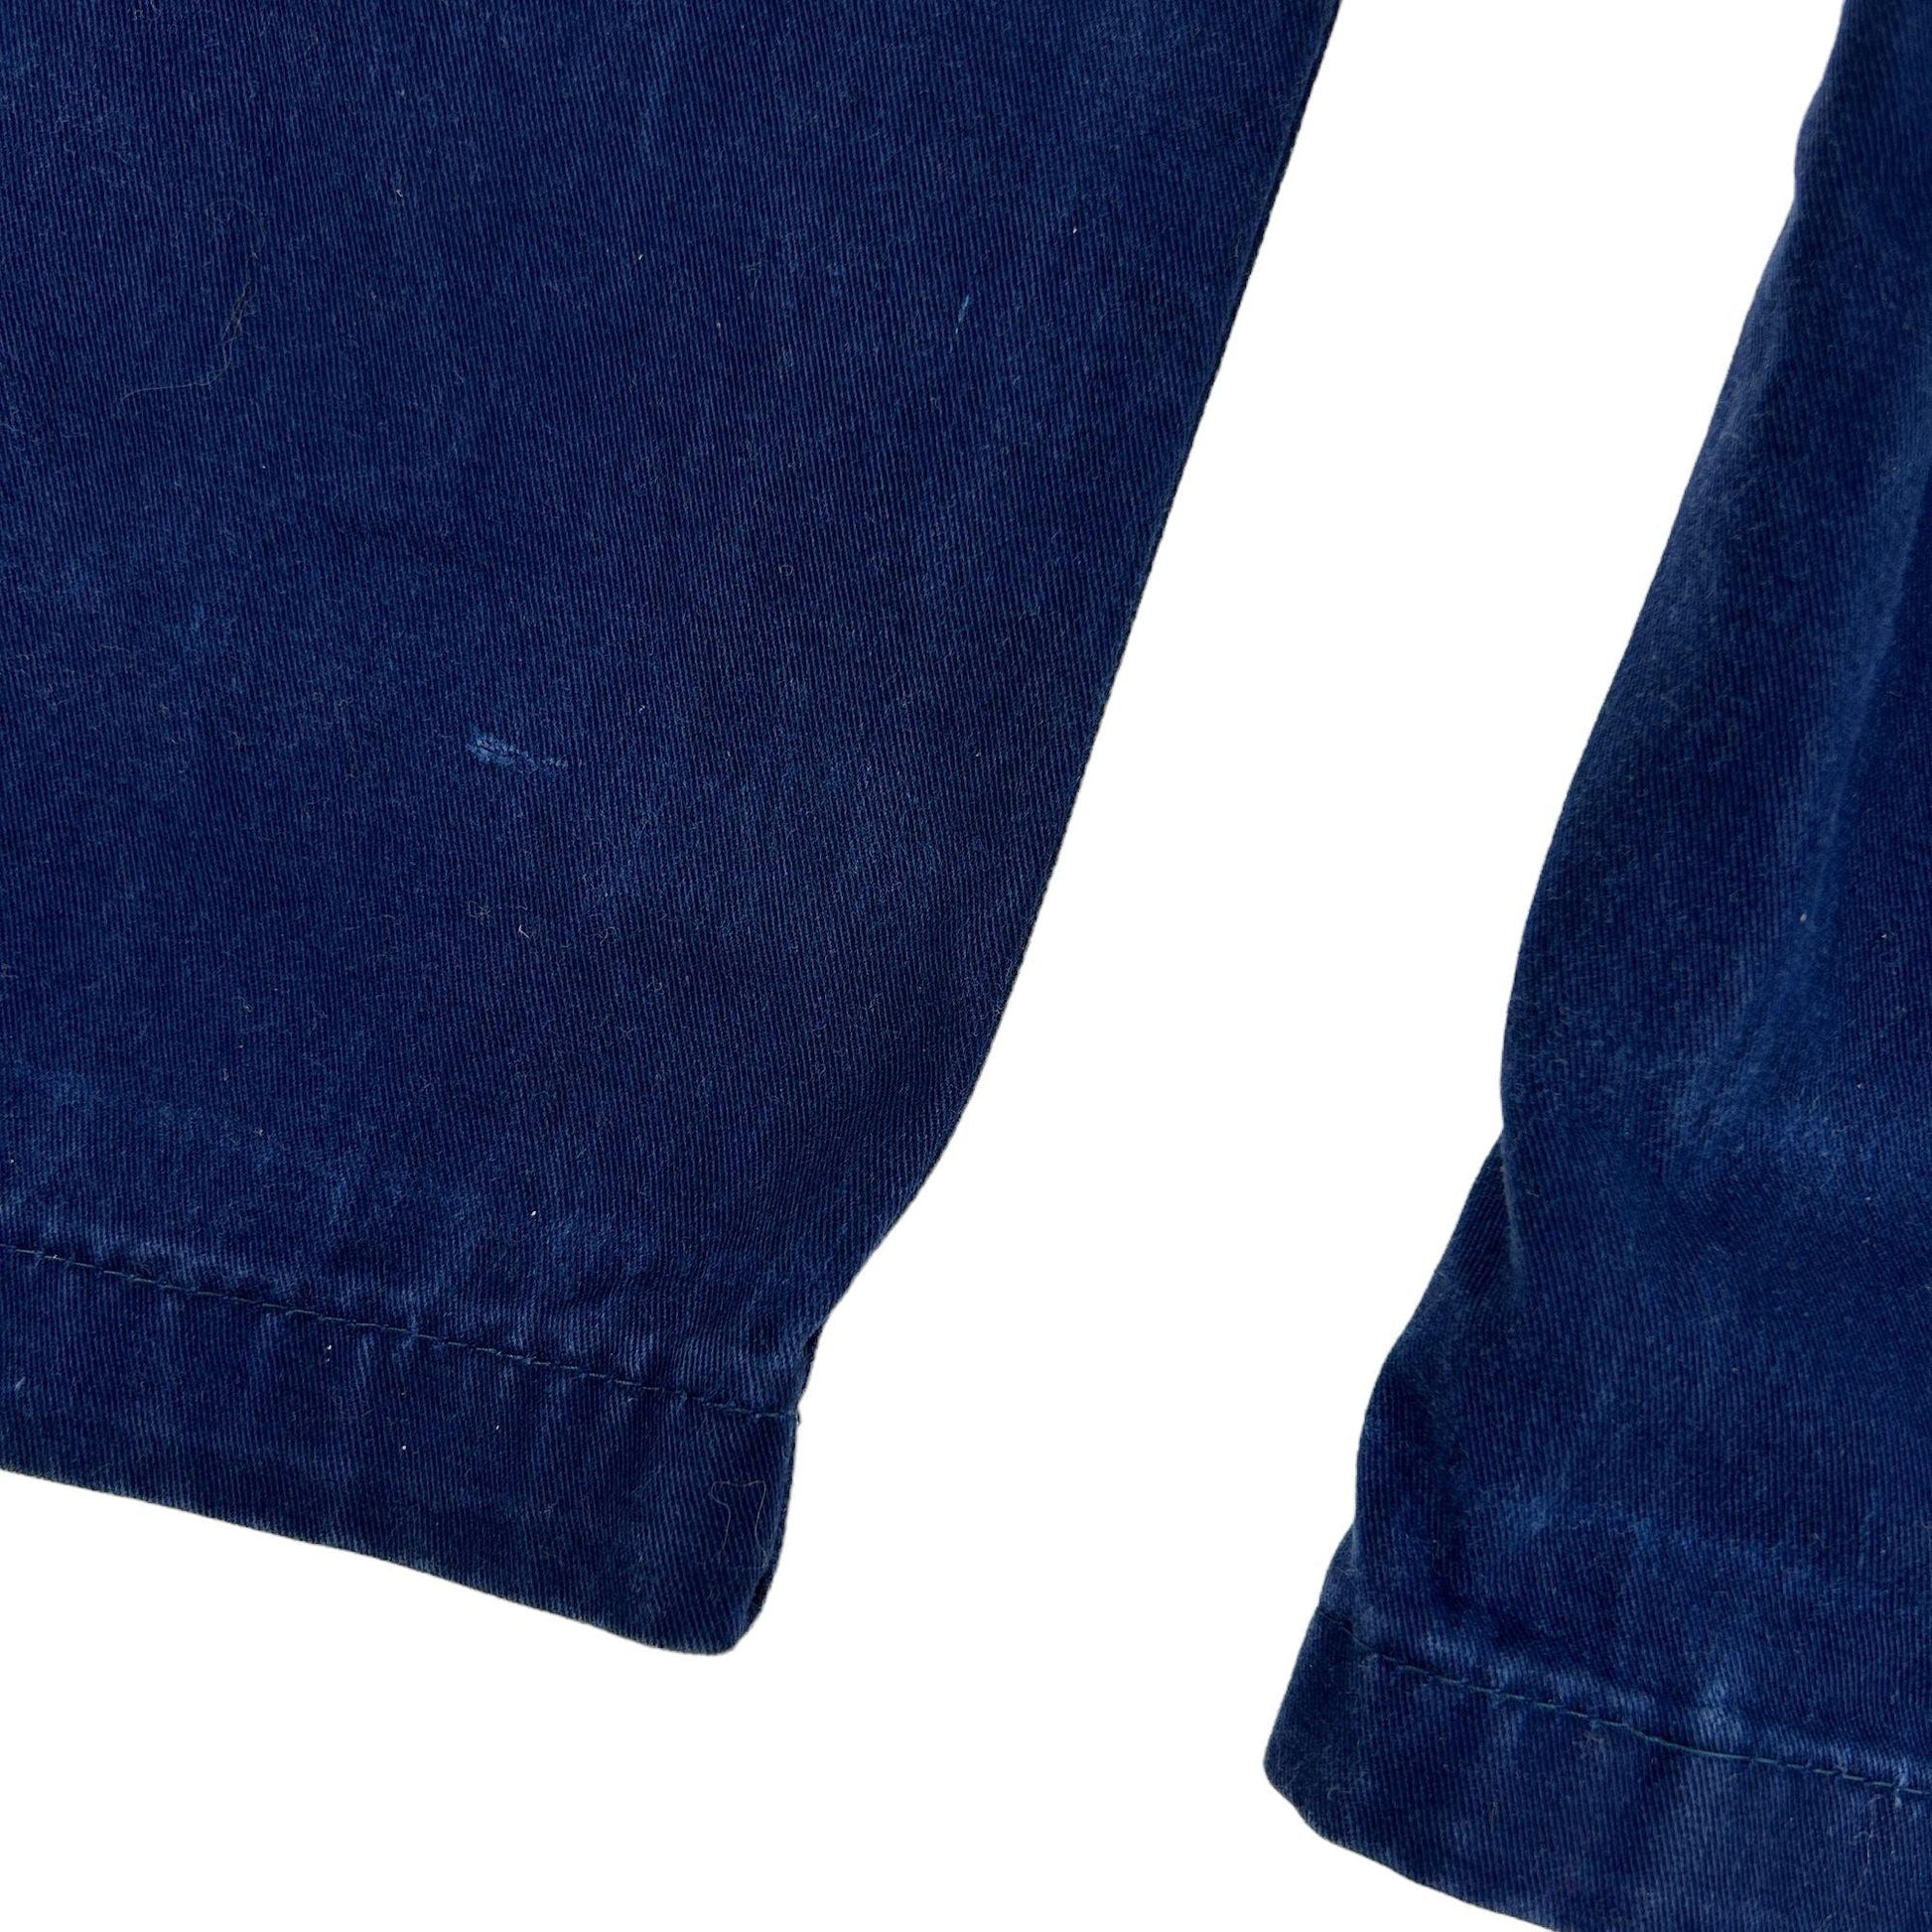 Vintage Yves Saint Laurent Trousers Size W37 - Known Source